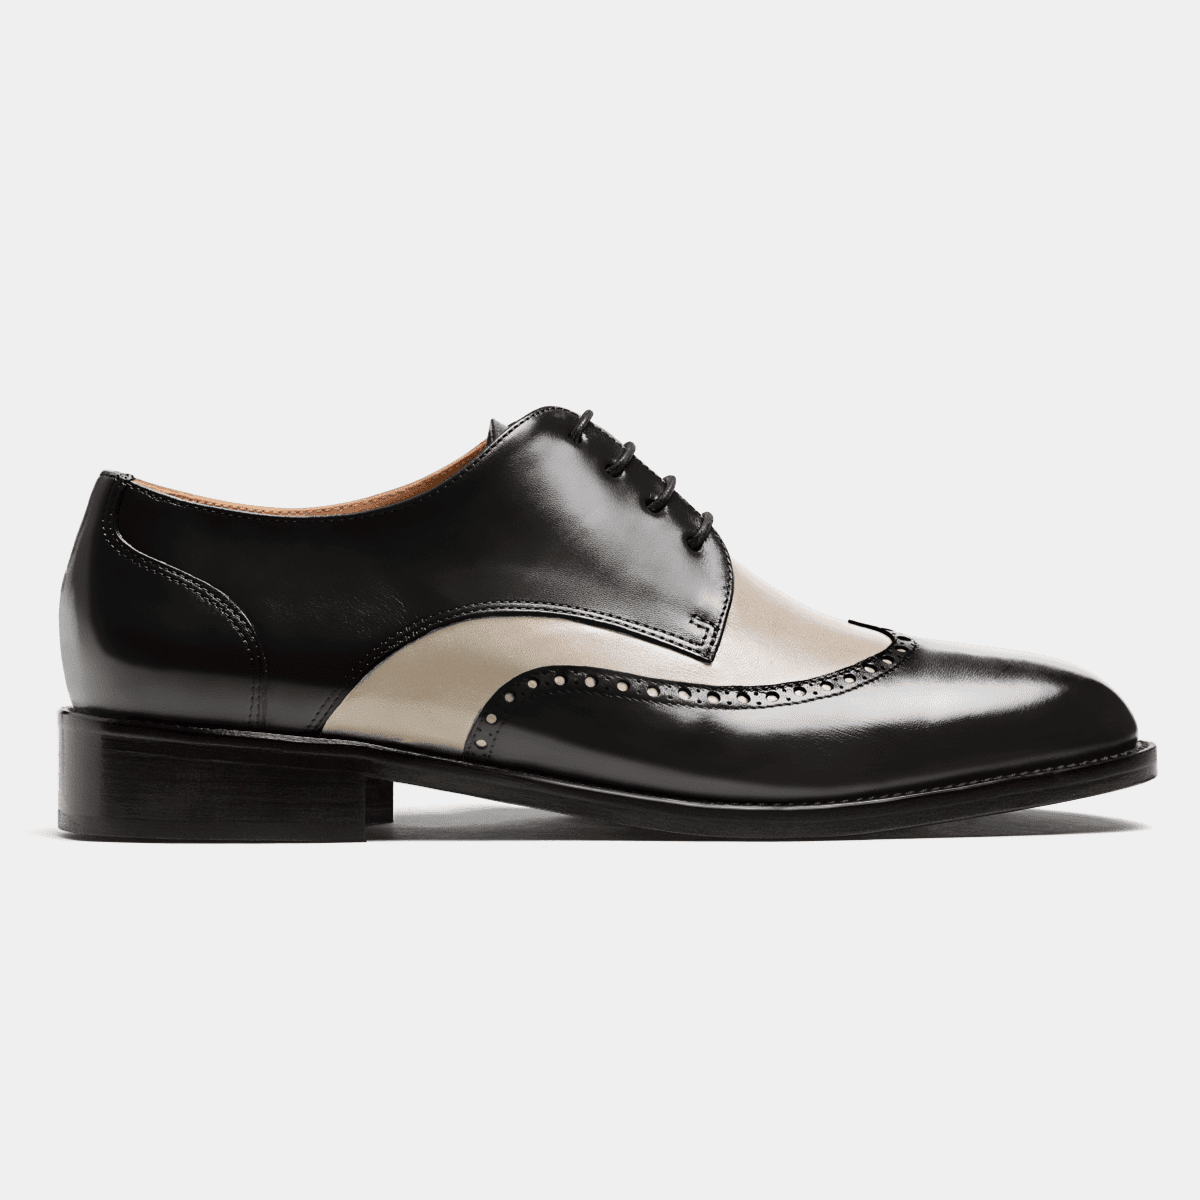 Quarter Brogue shoes - black & white flora leather & leather